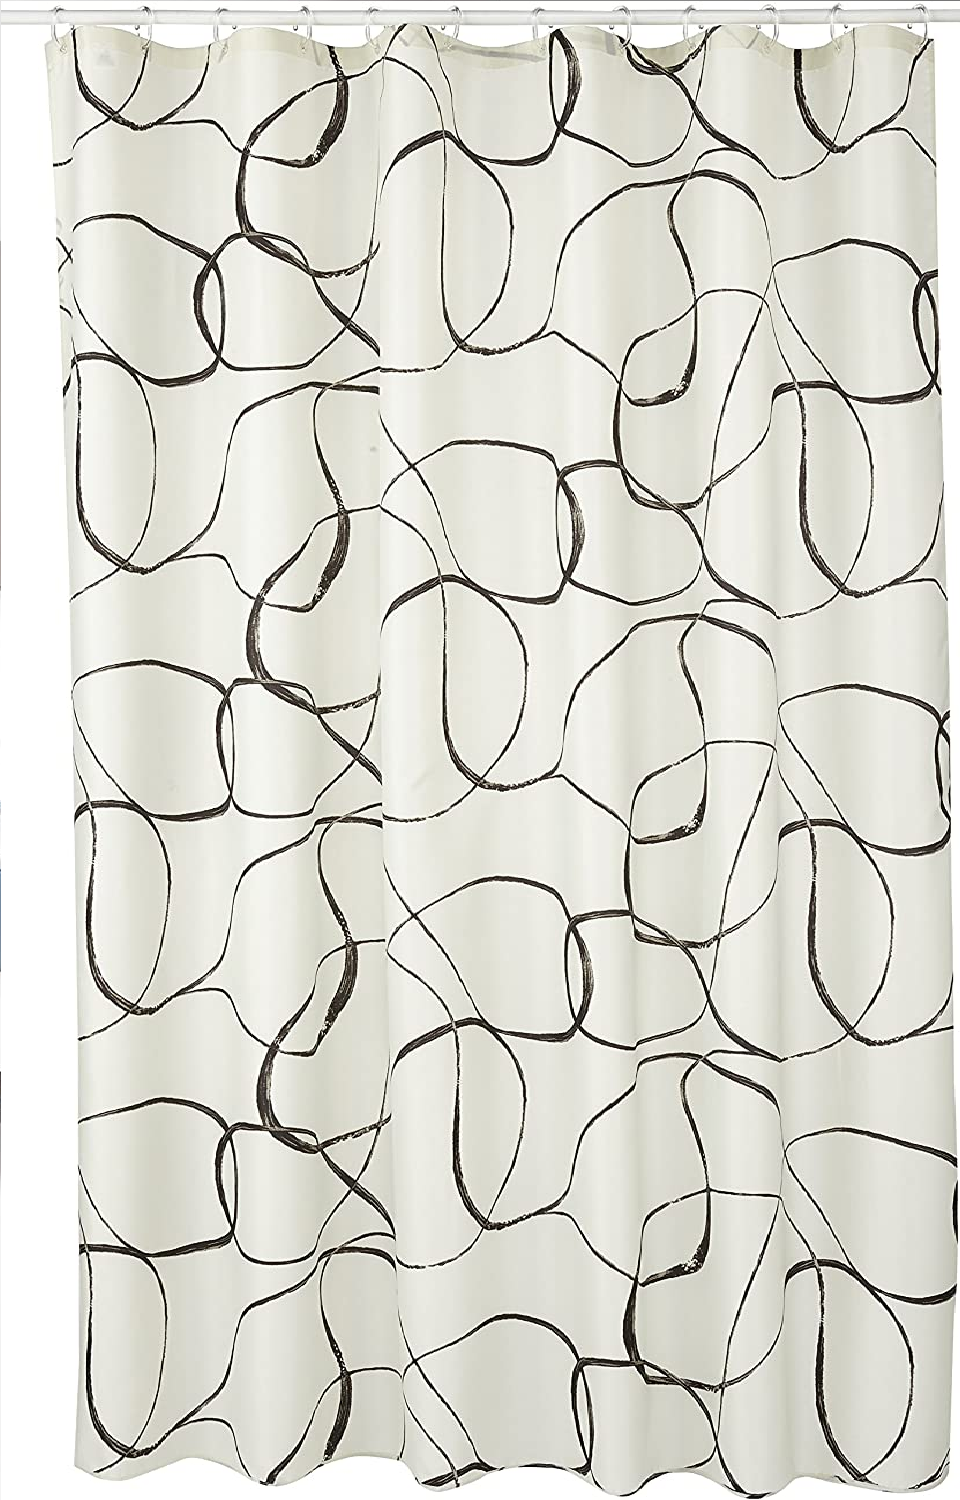 Textil Duschvorhang Movement, Farbe: Schwarz, B x H: 180 x 200 cm